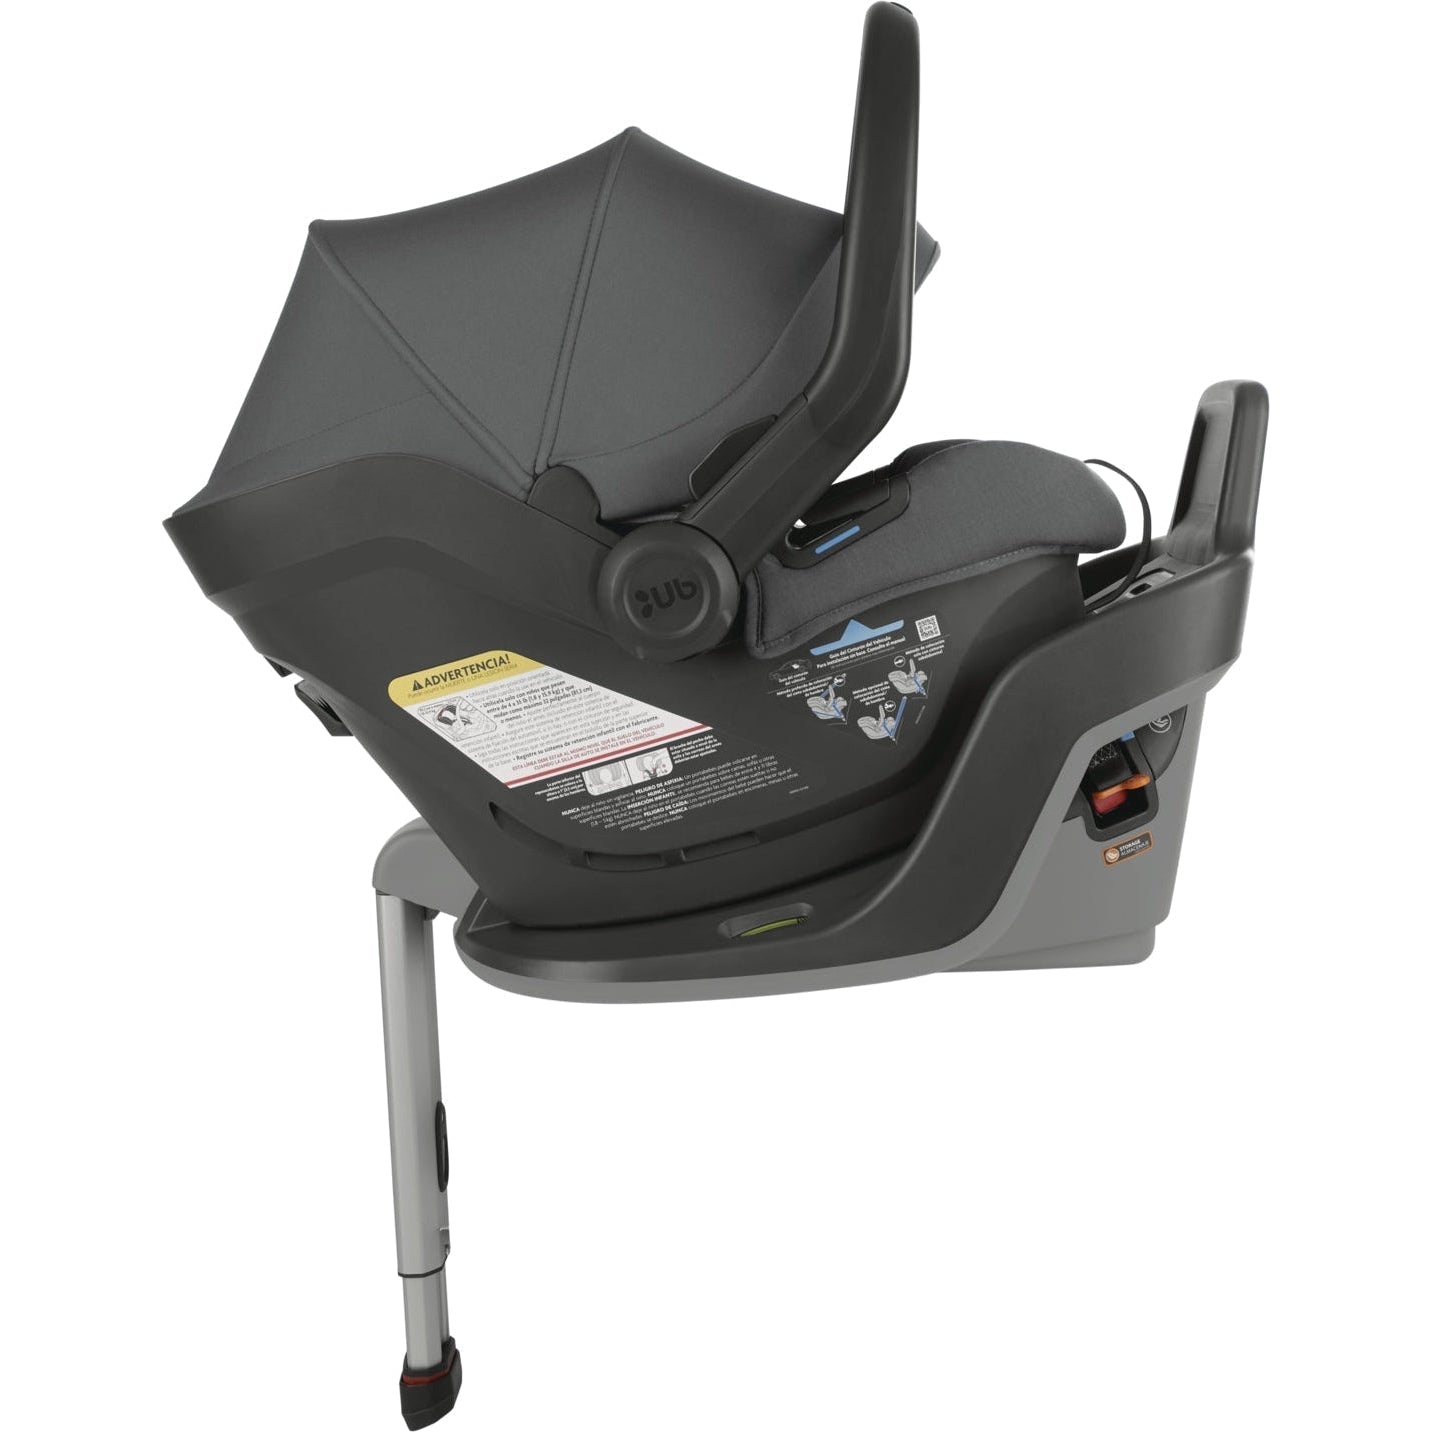 UPPAbaby Mesa Max Infant Car Seat + Base - Special Order